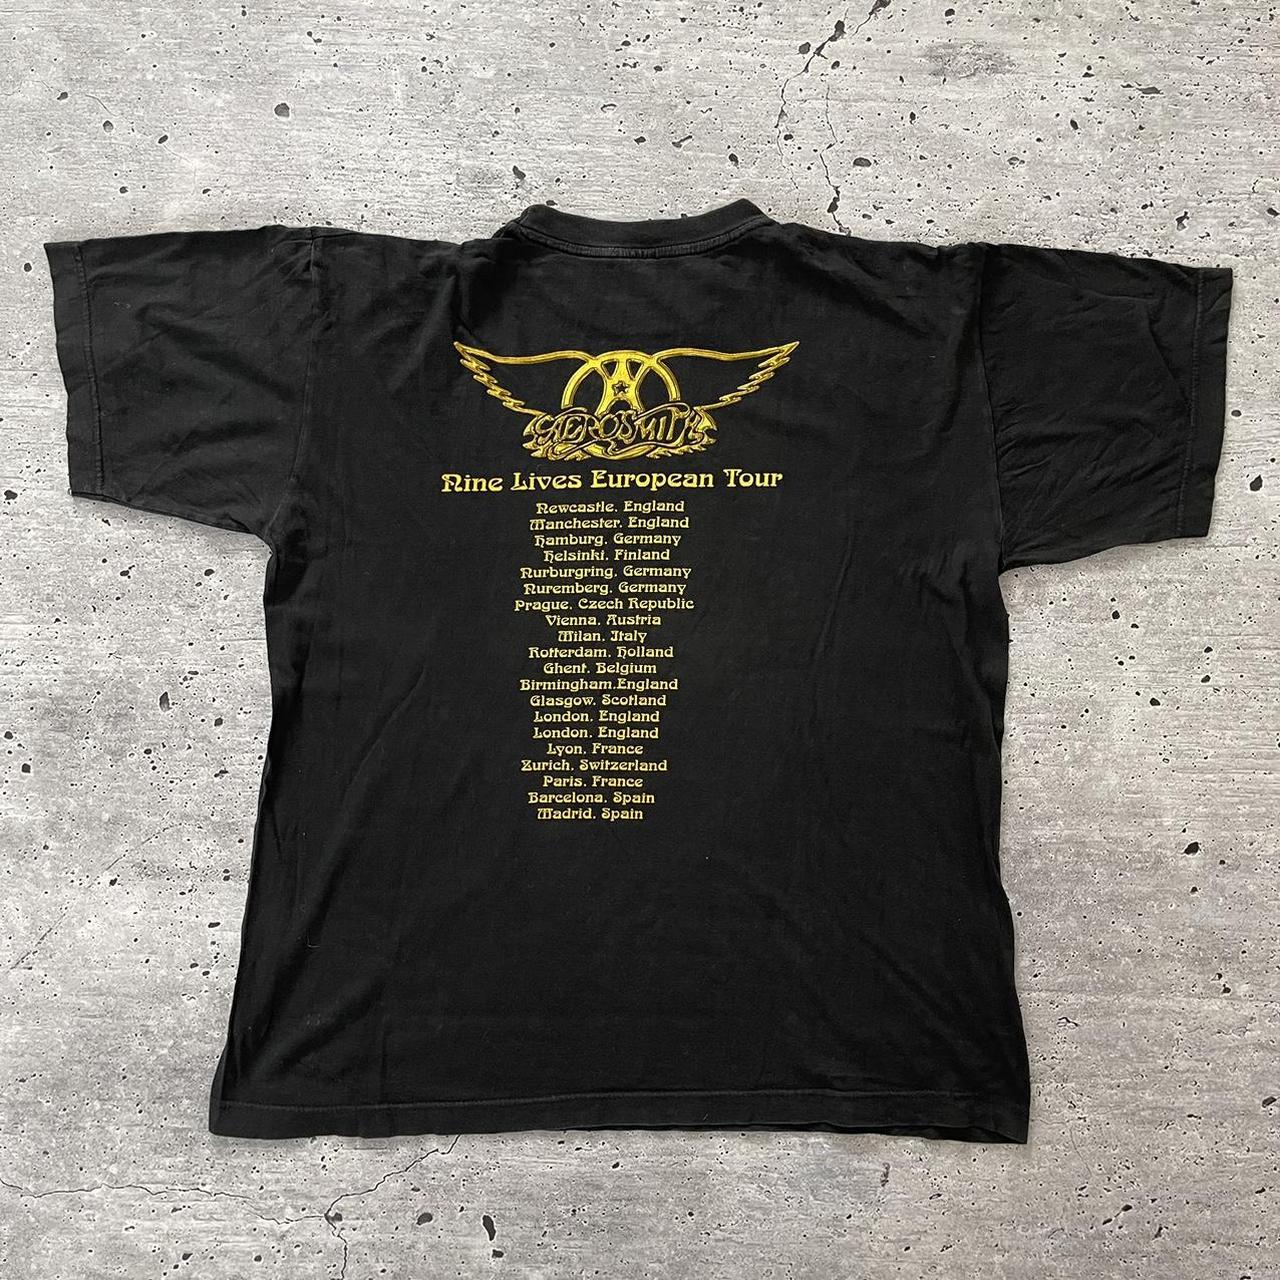 Vintage 1997 Aerosmith tour t shirt Size XL P2P... - Depop